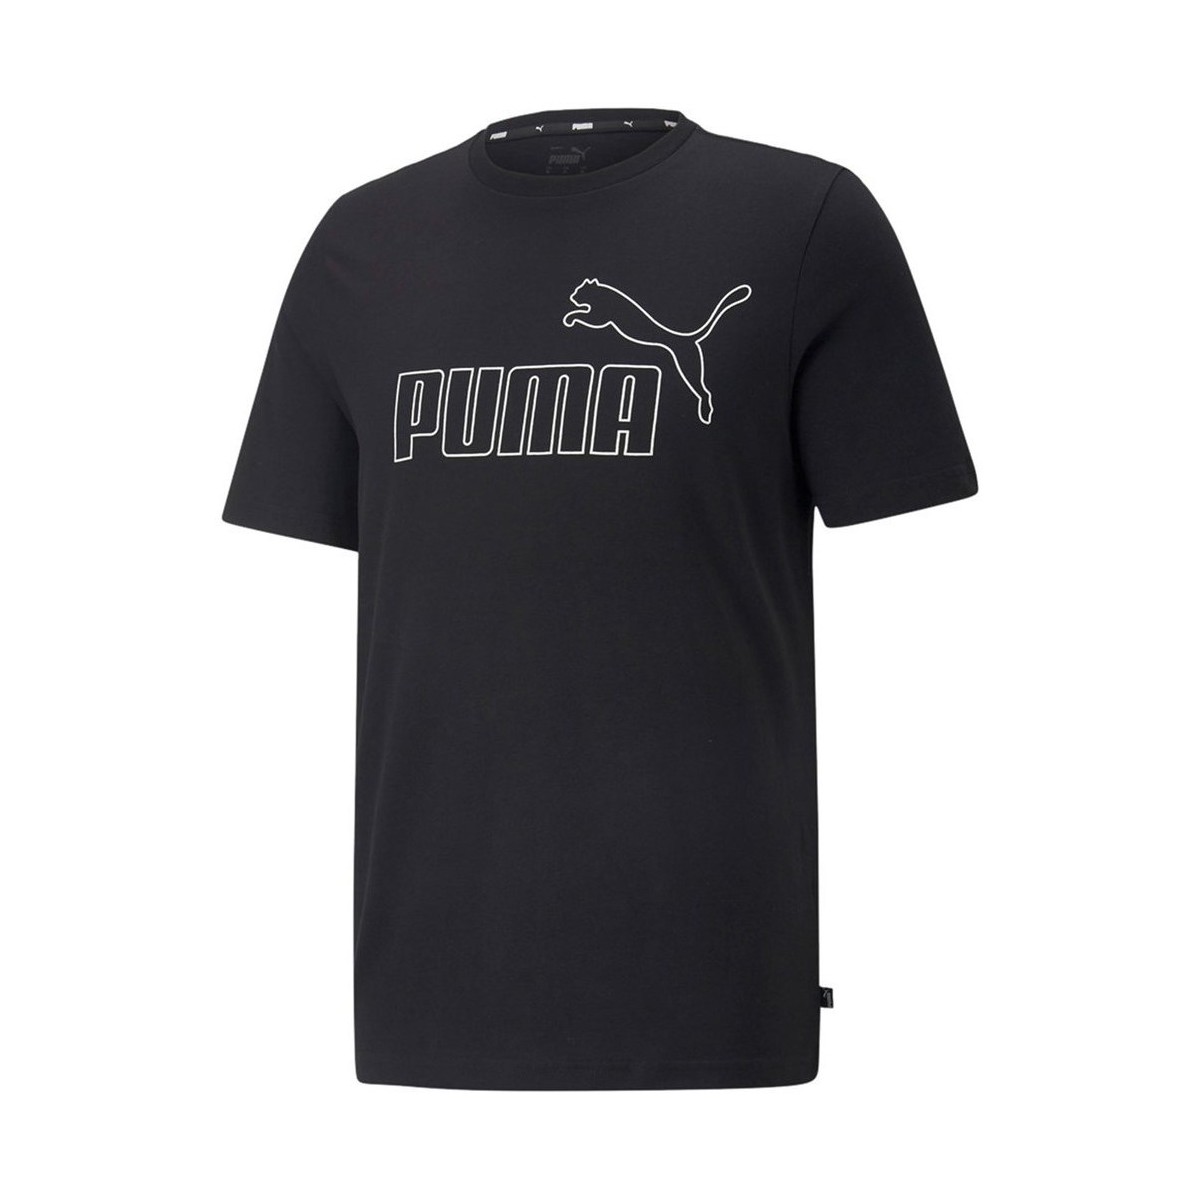 textil Herre T-shirts m. korte ærmer Puma Ess Elevated Tee Sort